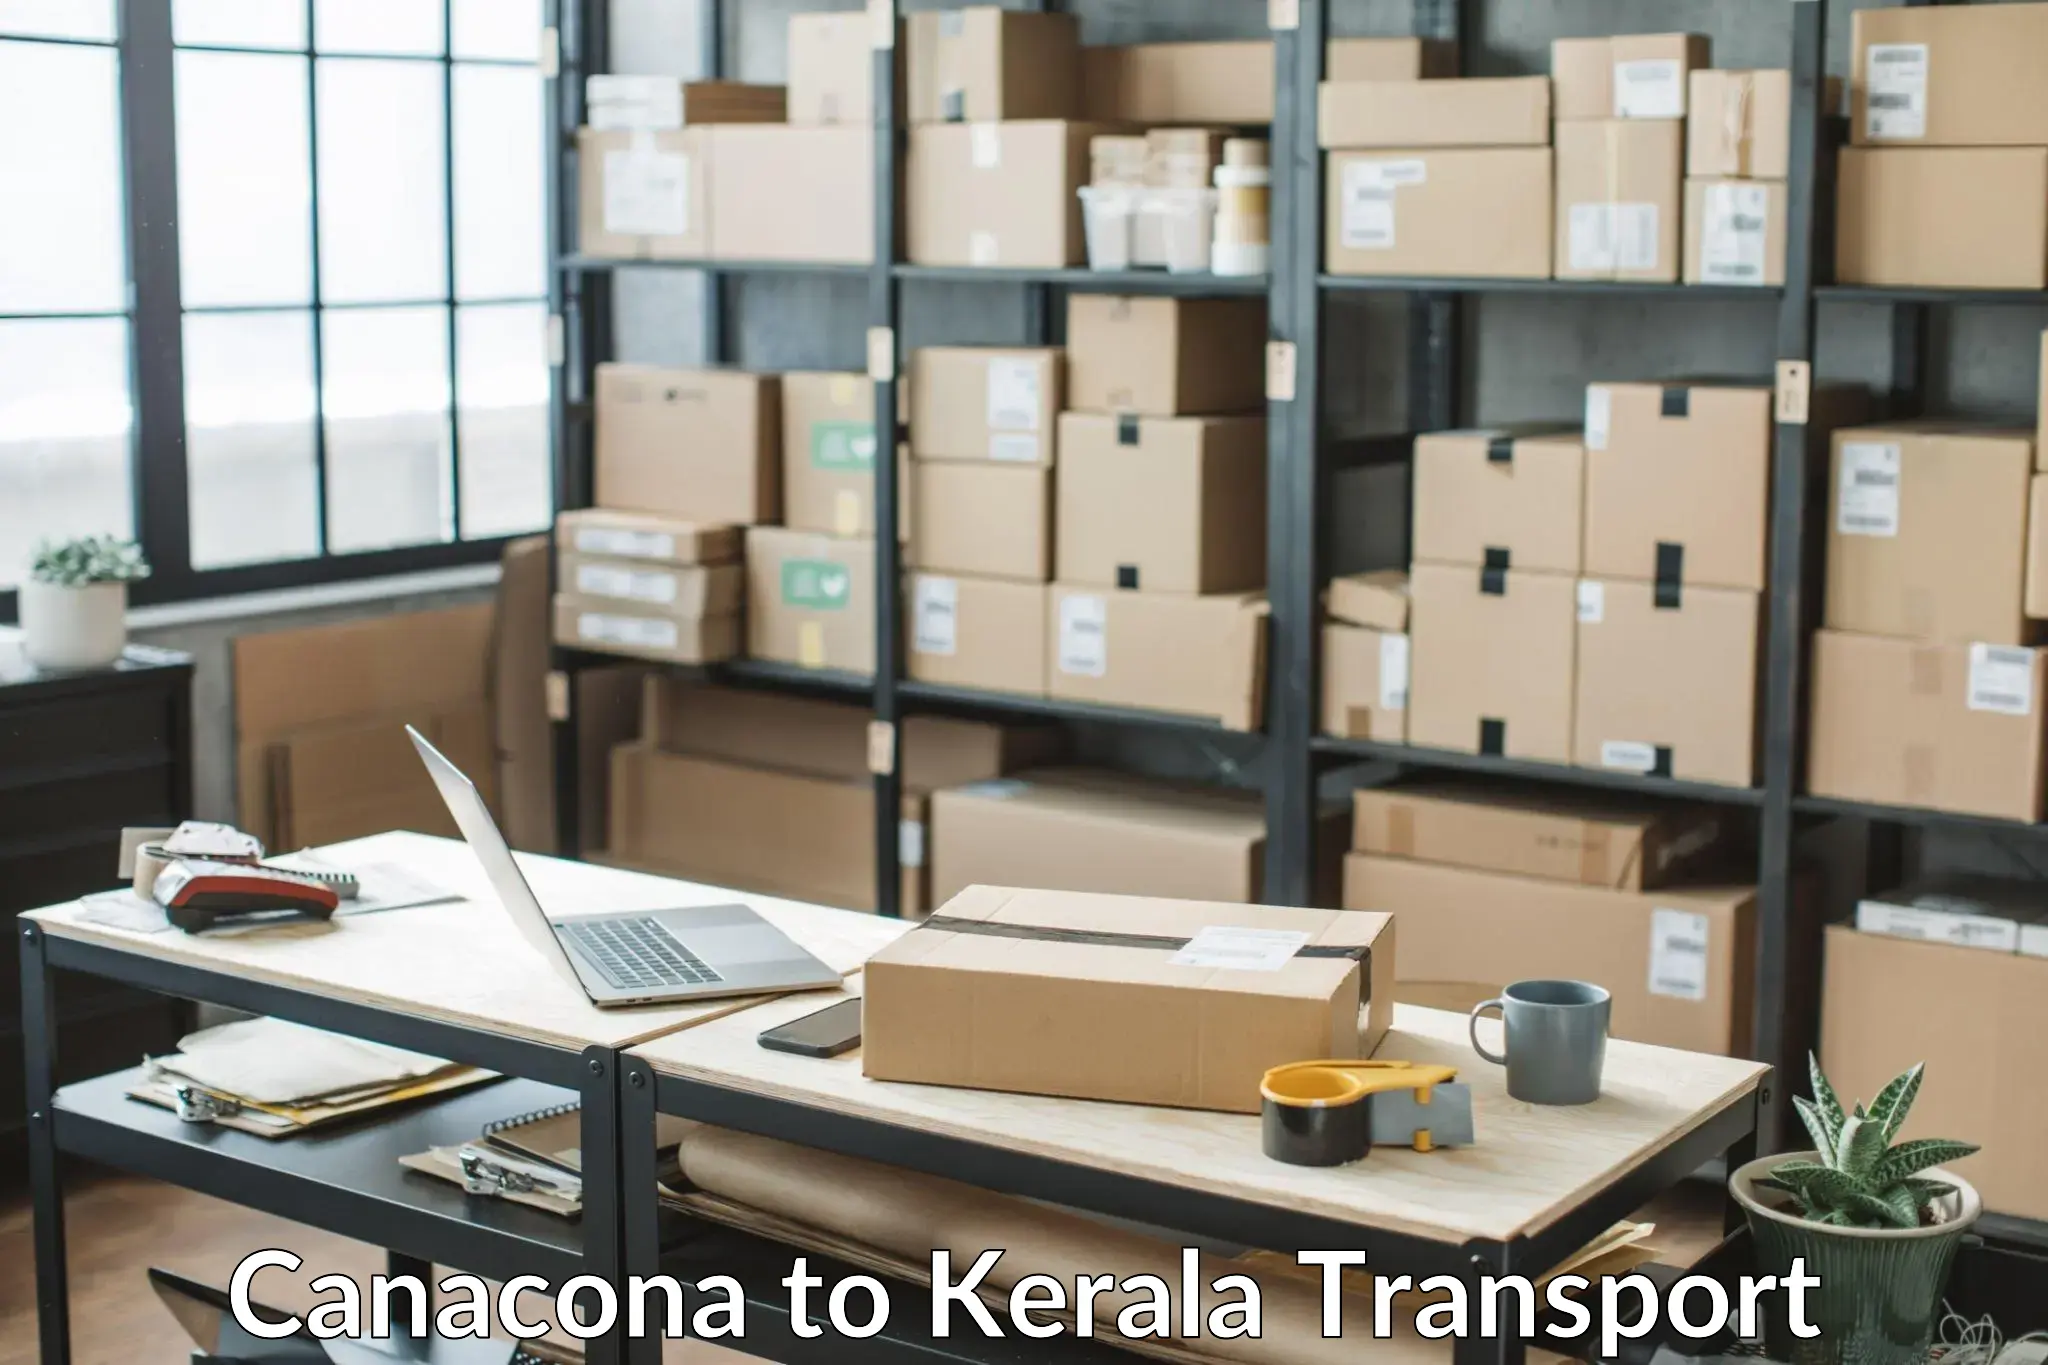 Shipping partner Canacona to Cochin University of Science and Technology